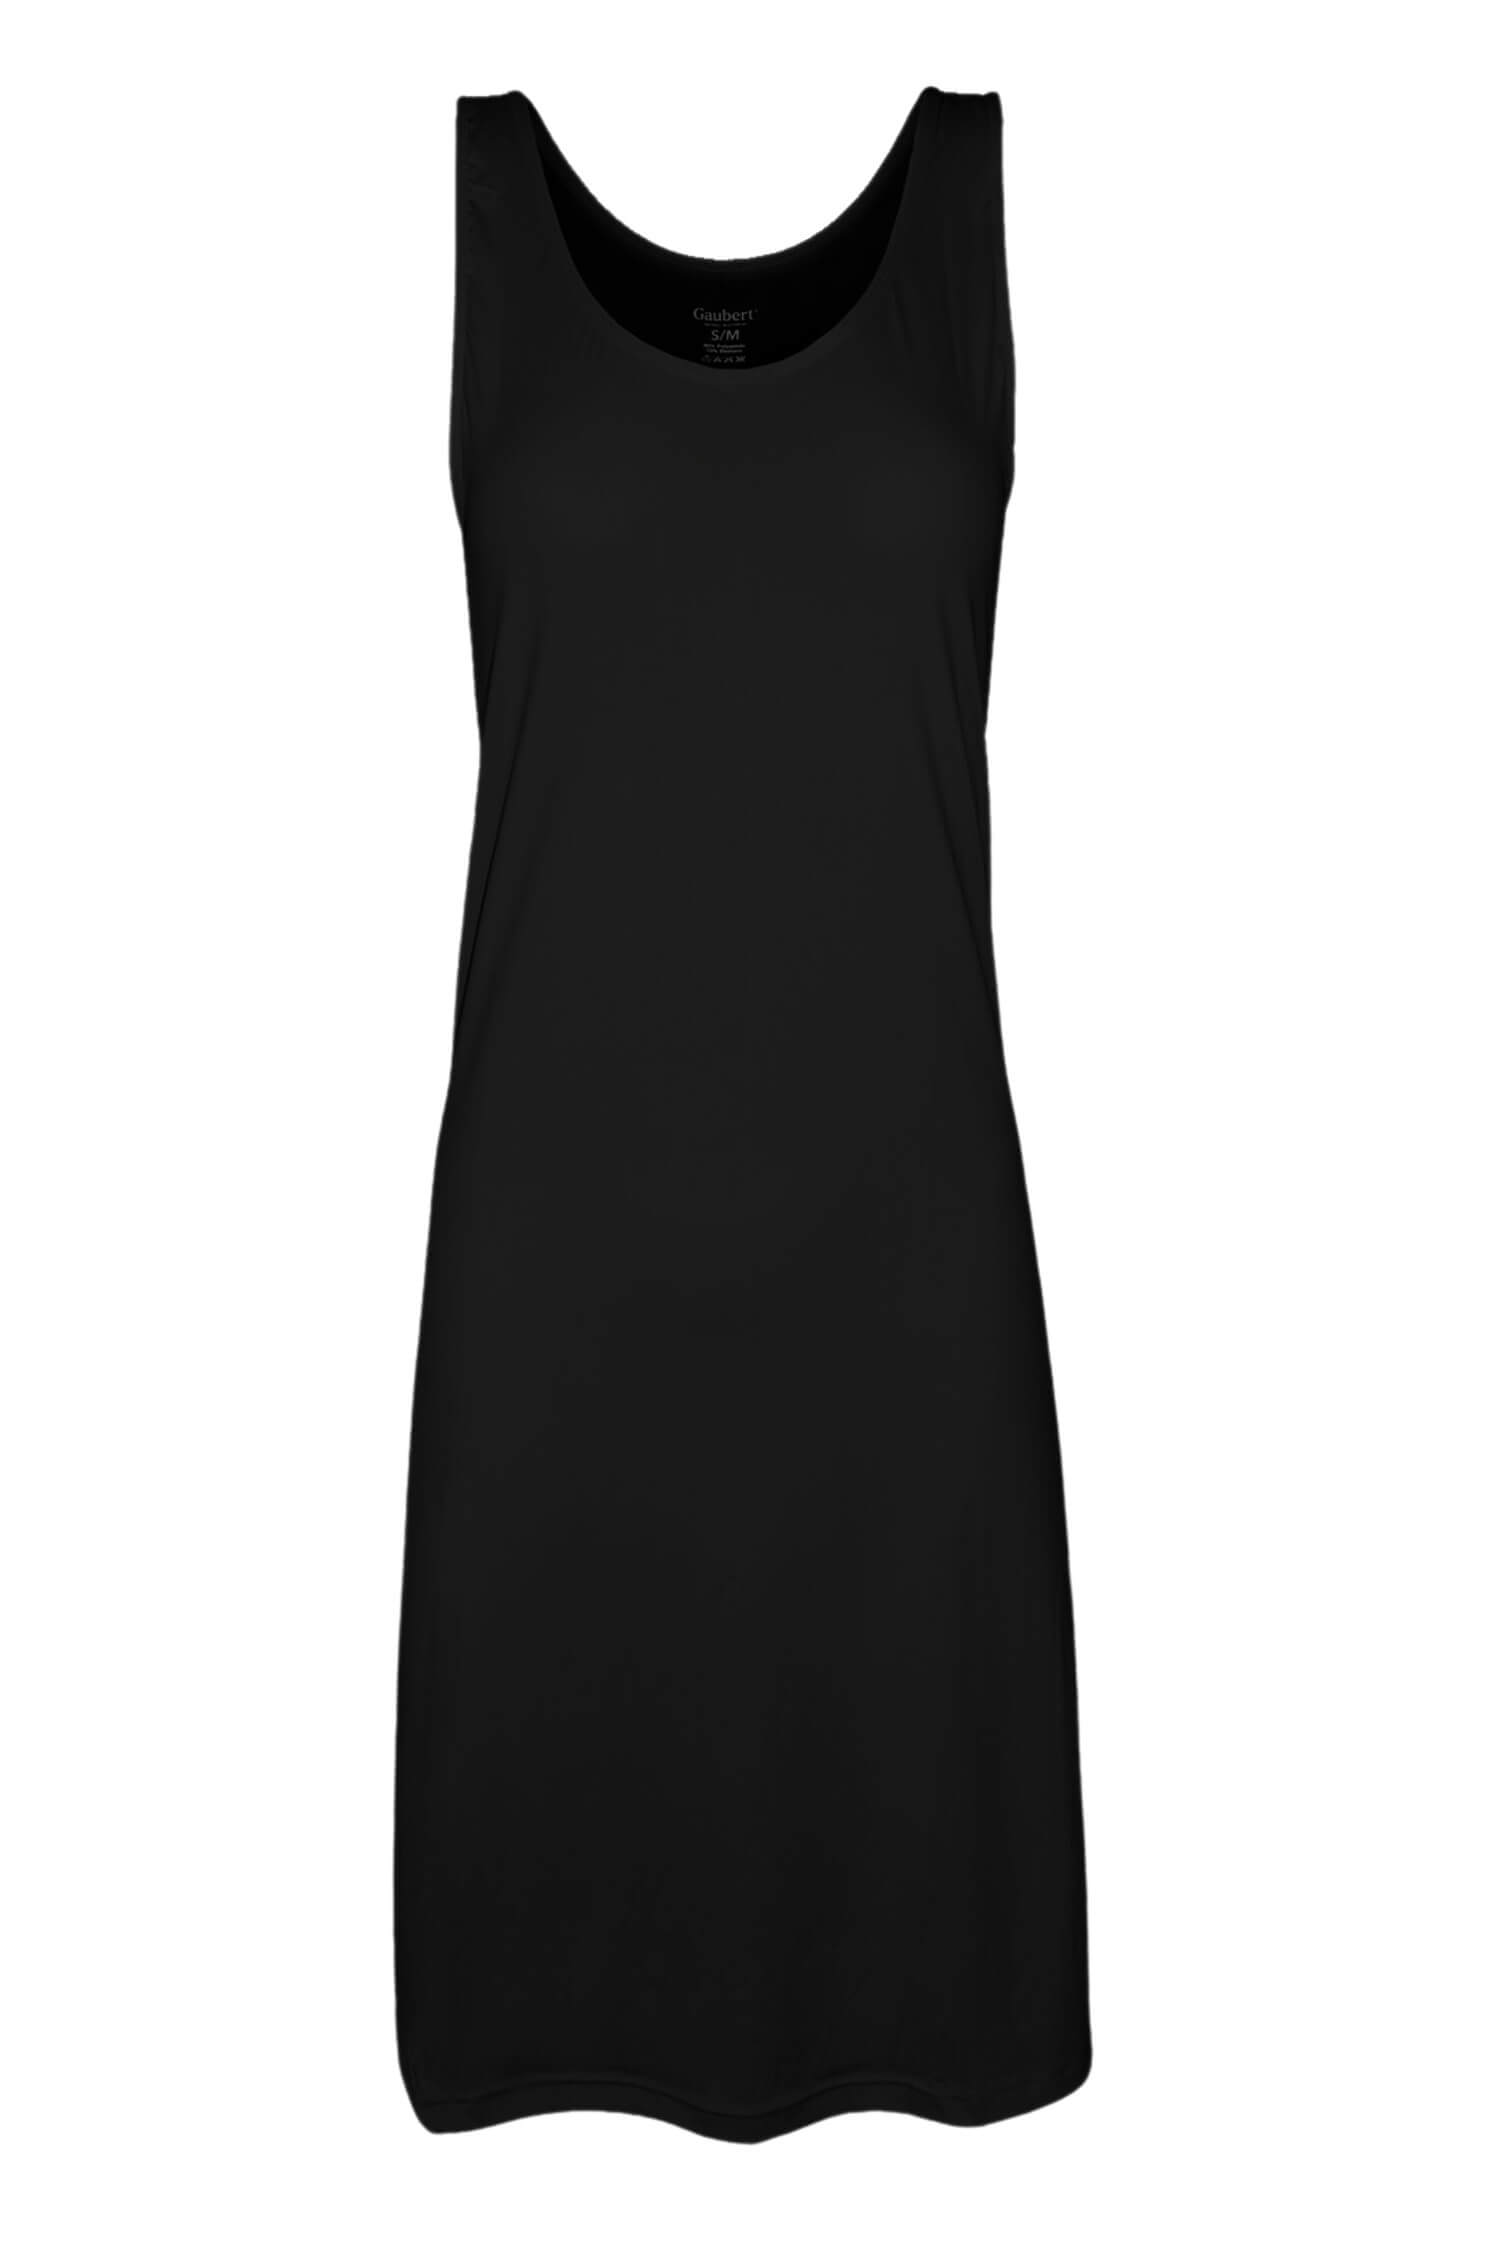 Klára dlouhá spodnička pod šaty GBTW-720 XL černá